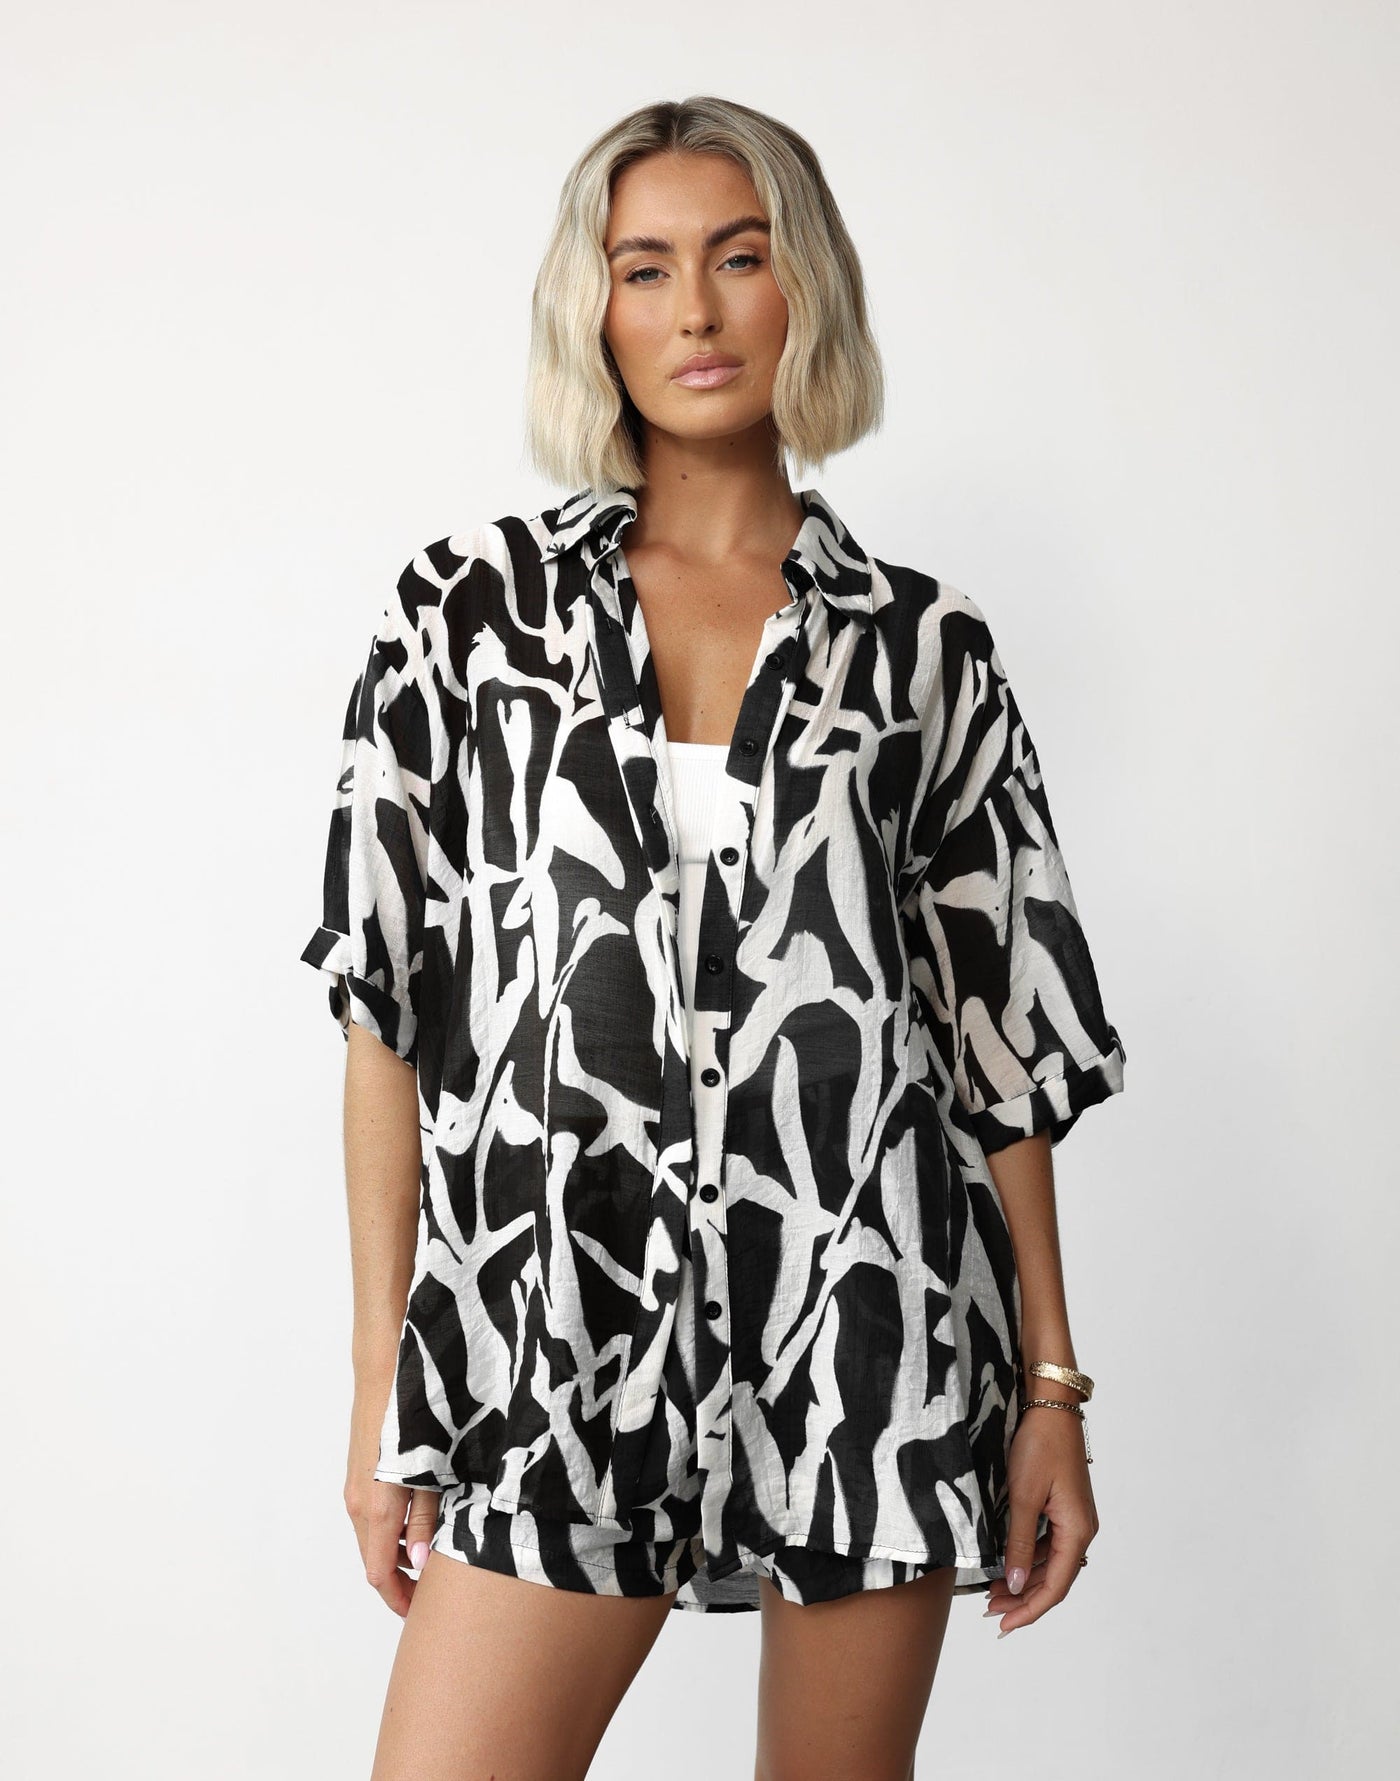 Avila Shirt (Monochrome Swirl) - Flowy Relaxed Fit Oversized Shirt - Women's Top - Charcoal Clothing